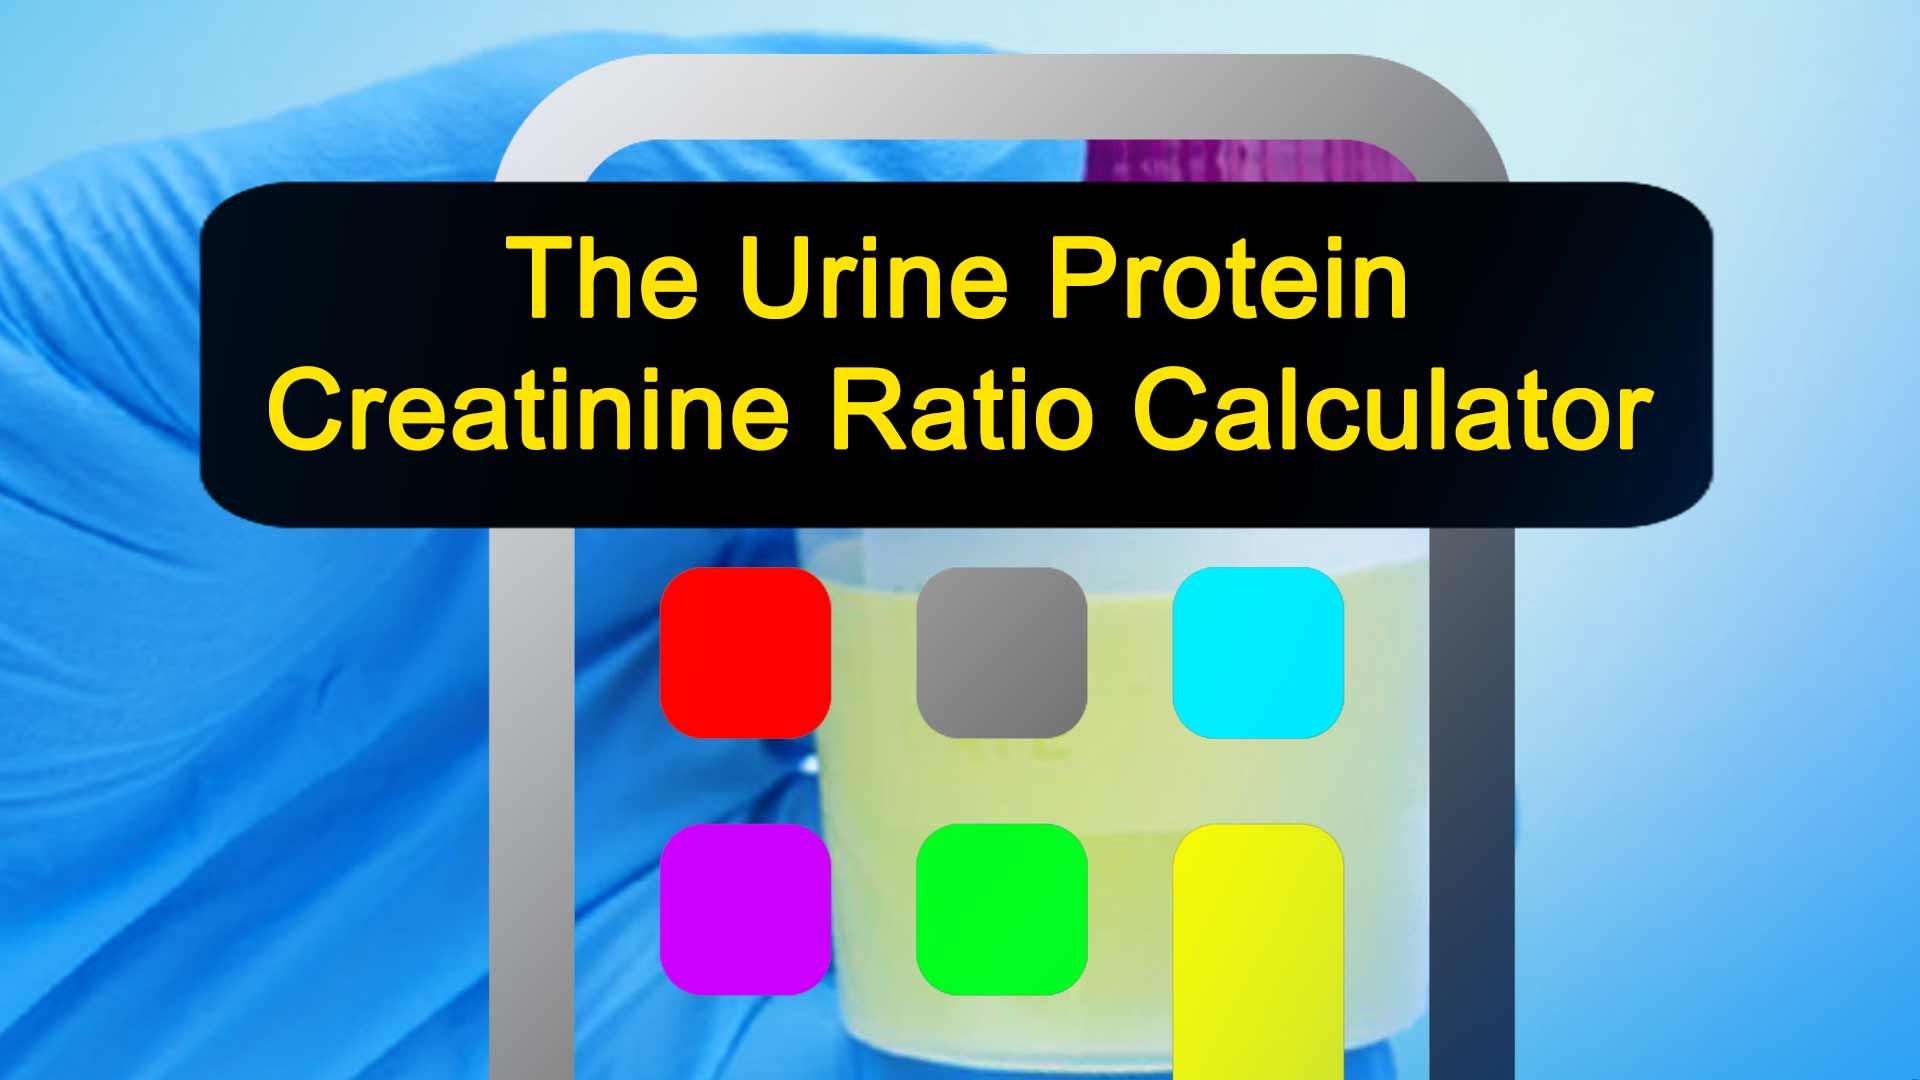 The Urine Protein Creatinine Ratio Calculator